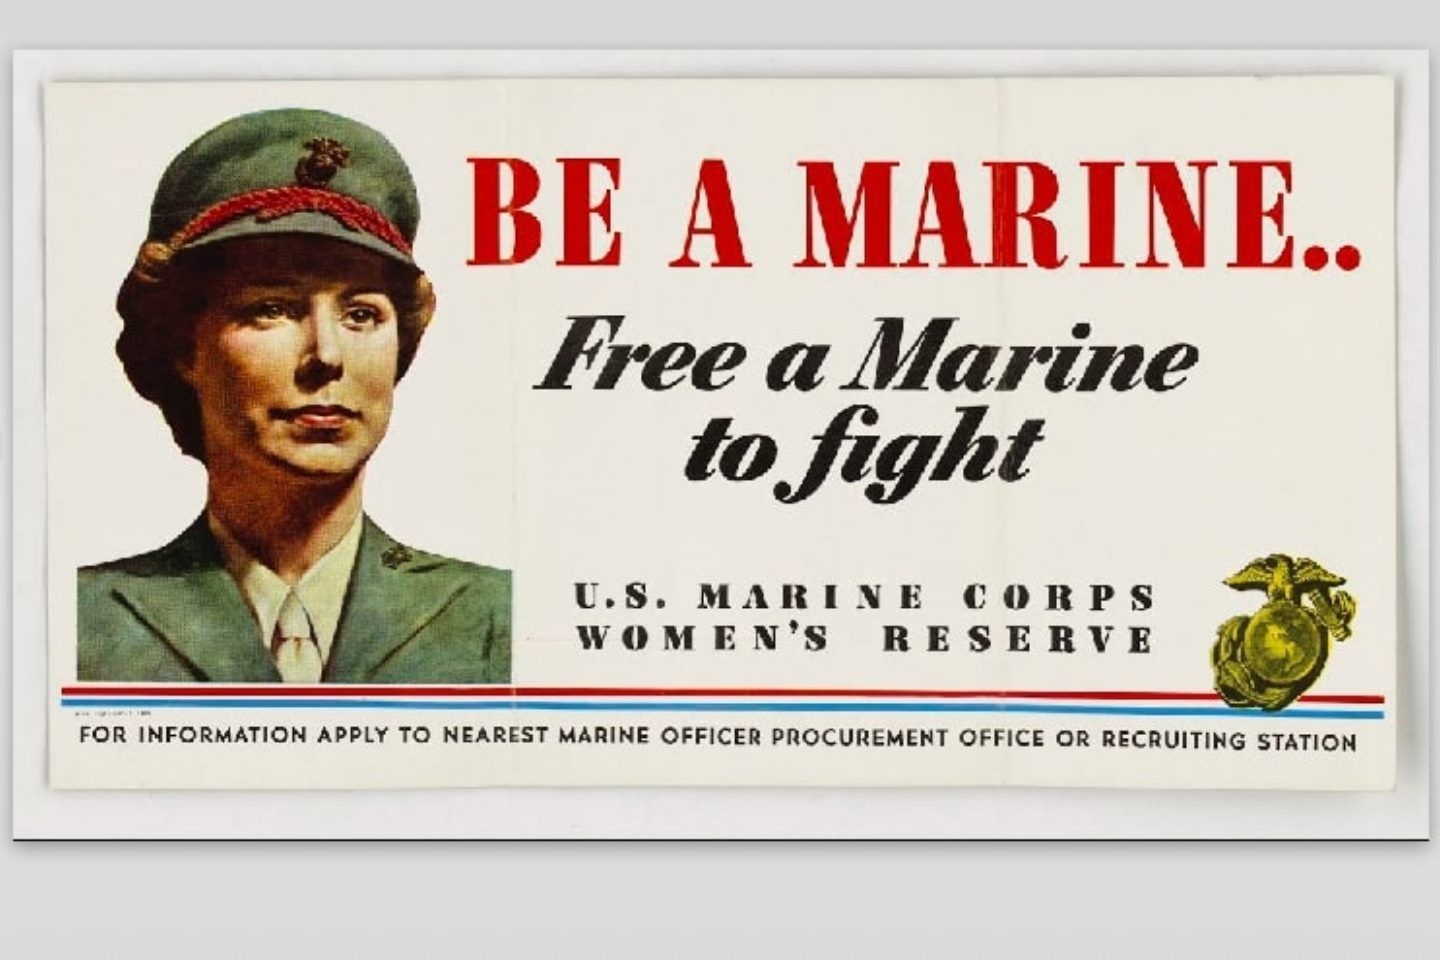 Marine Corps Women’s Reserve Established Feb 13, 1943
image located at https://www.womenshistory.org/exhibits/be-marine-free-marine-fight-united-states-marine-corps-womens-reserve